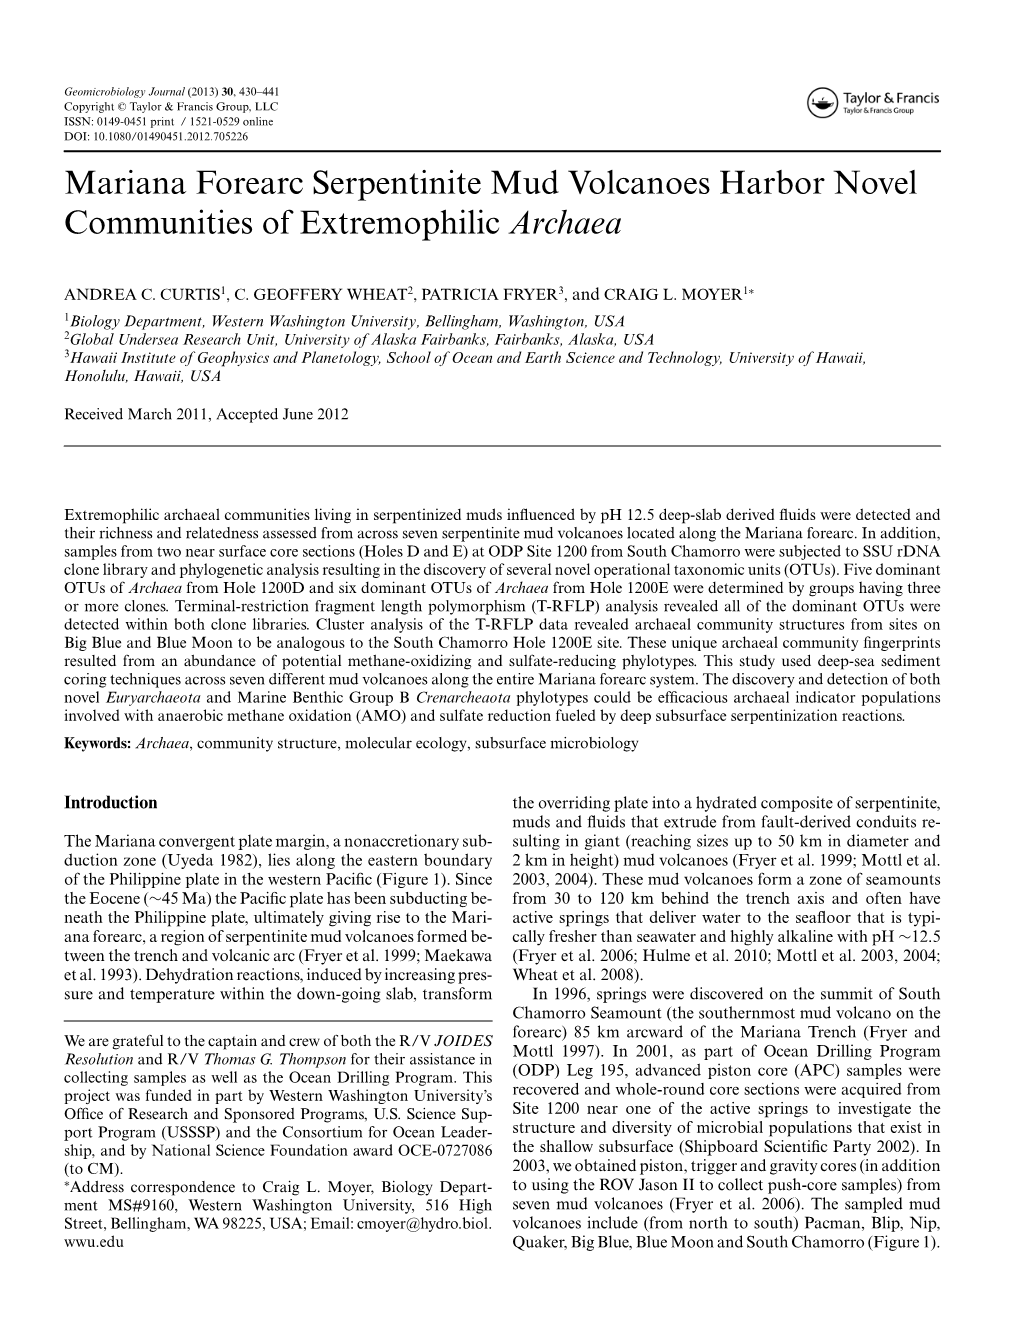 Mariana Forearc Serpentinite Mud Volcanoes Harbor Novel Communities of Extremophilic Archaea